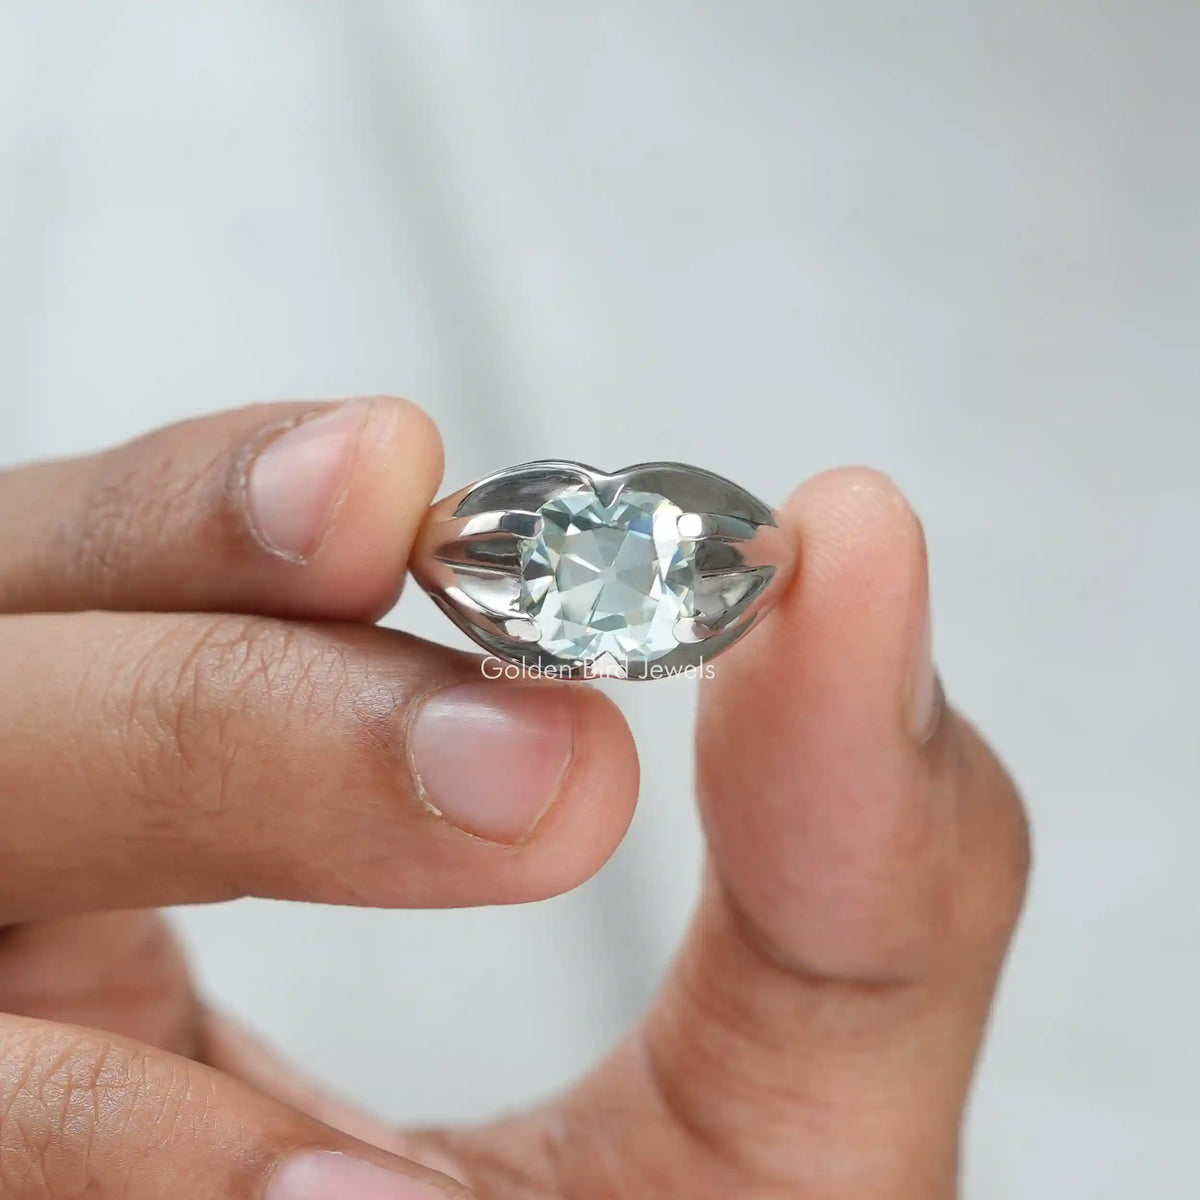 Swarovski Gold-tone Plated Vio Crystal Ring, Size 52 5139700 9009651397003  - Jewelry, Vio - Jomashop